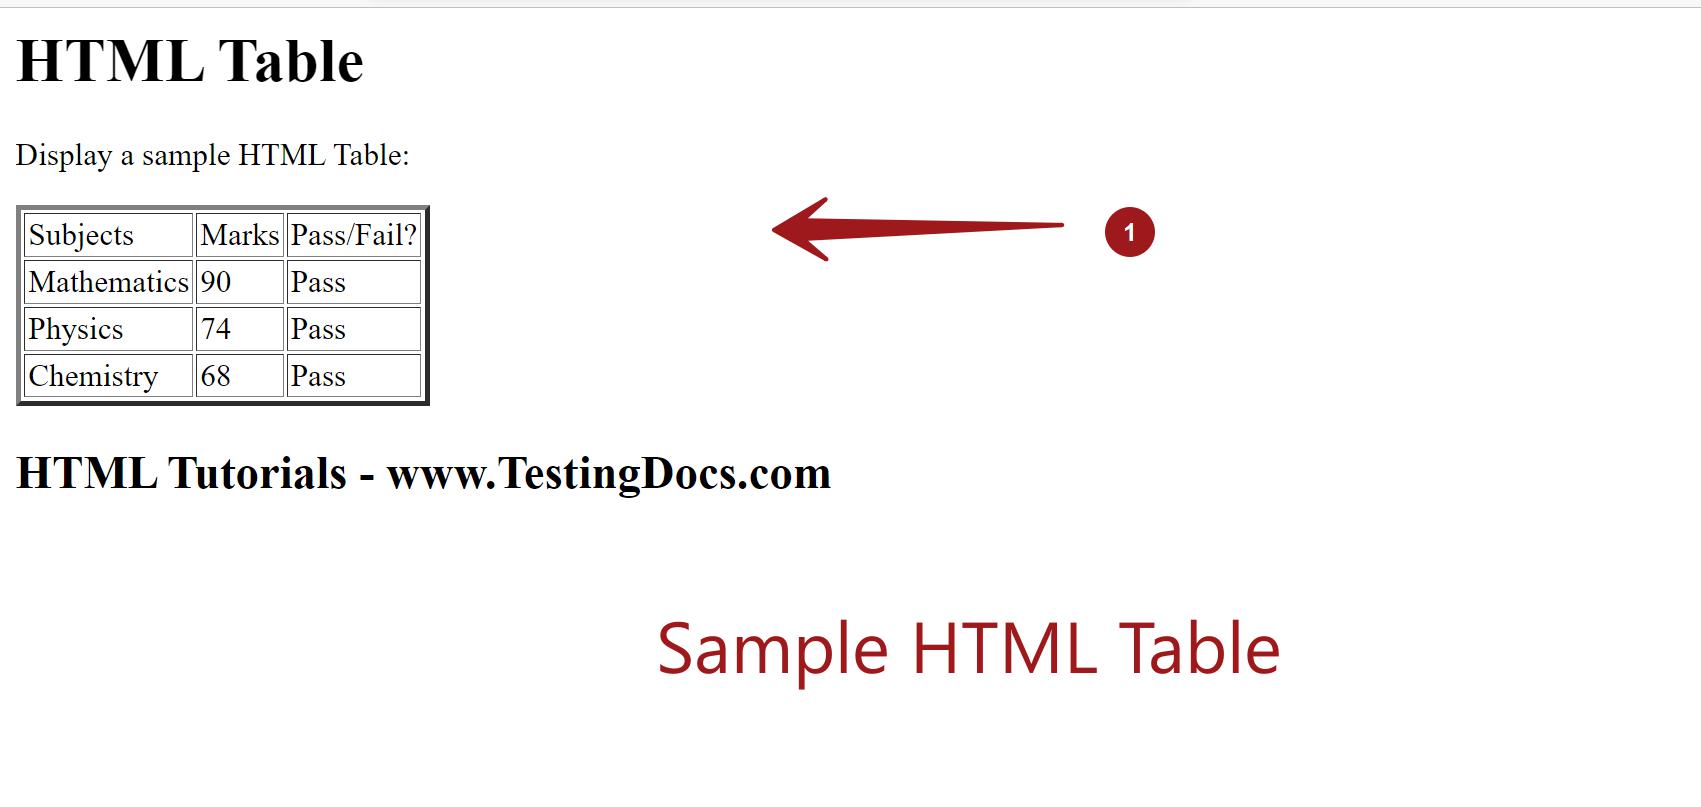 Sample HTML Table